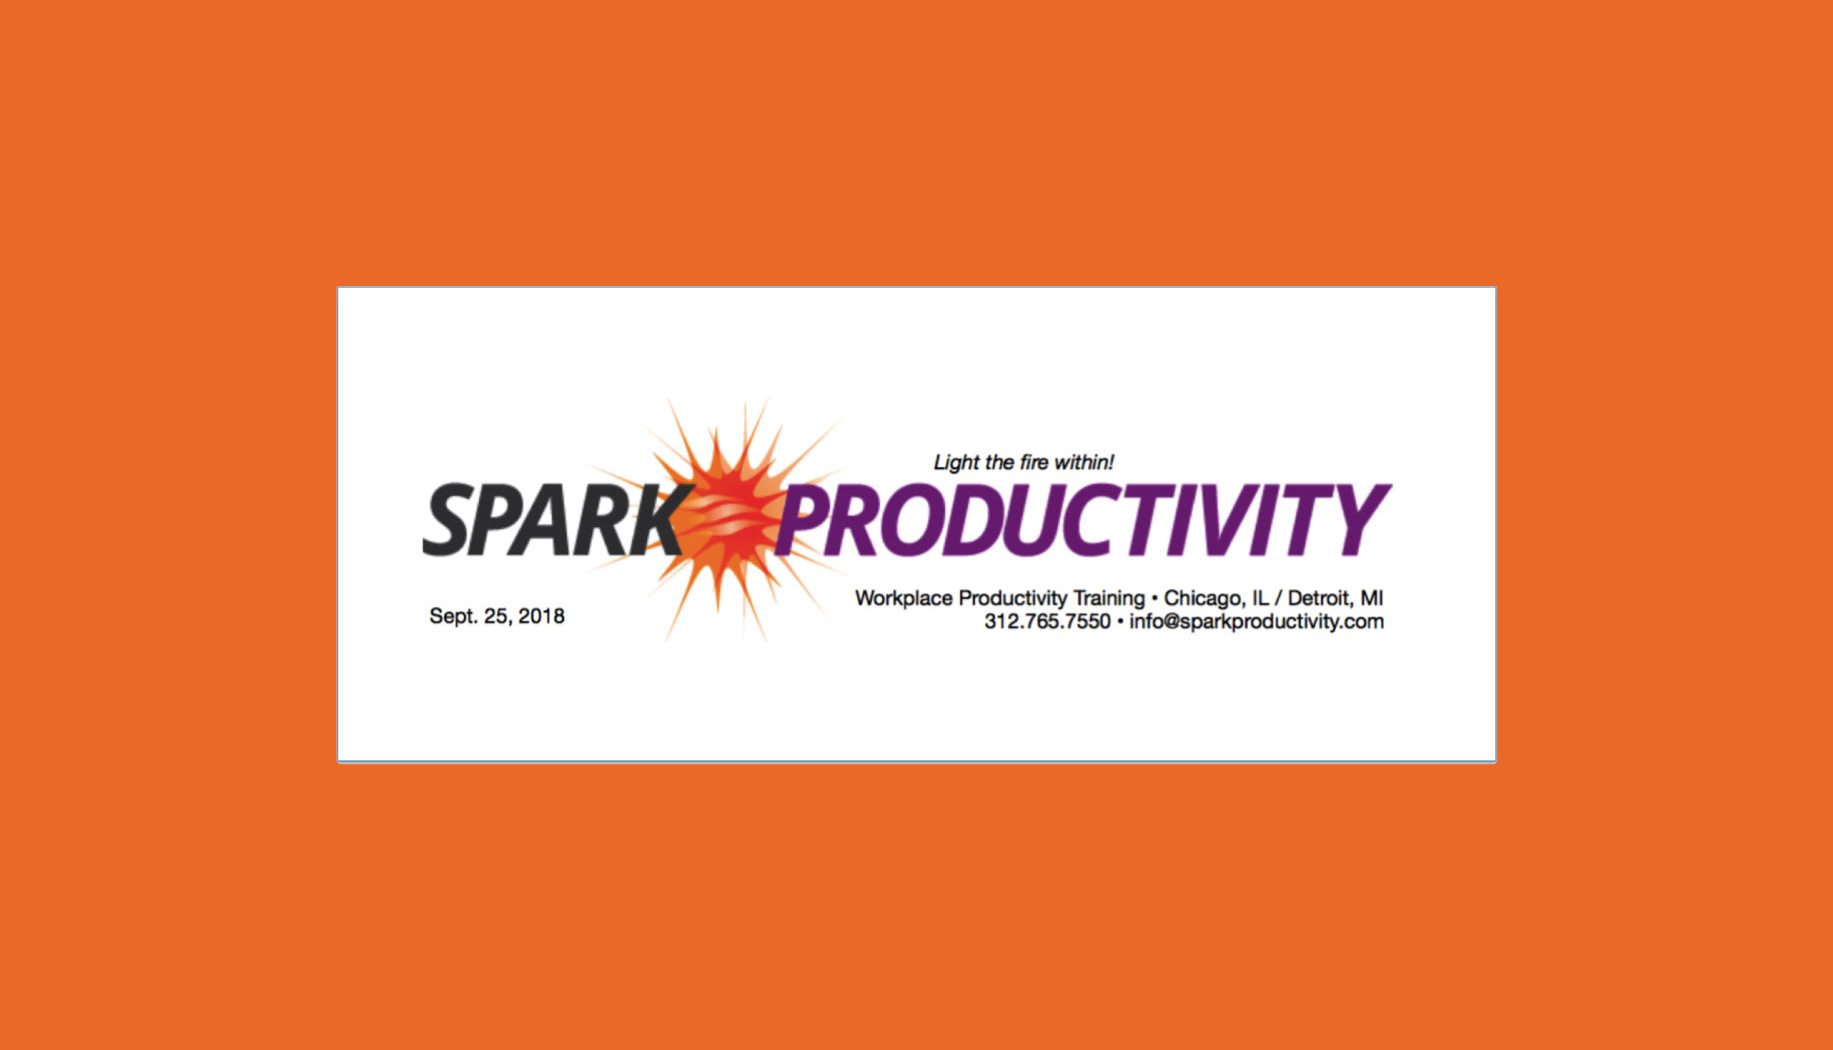 Spark Productivity Press Release: Now Also Serving the Detroit Area